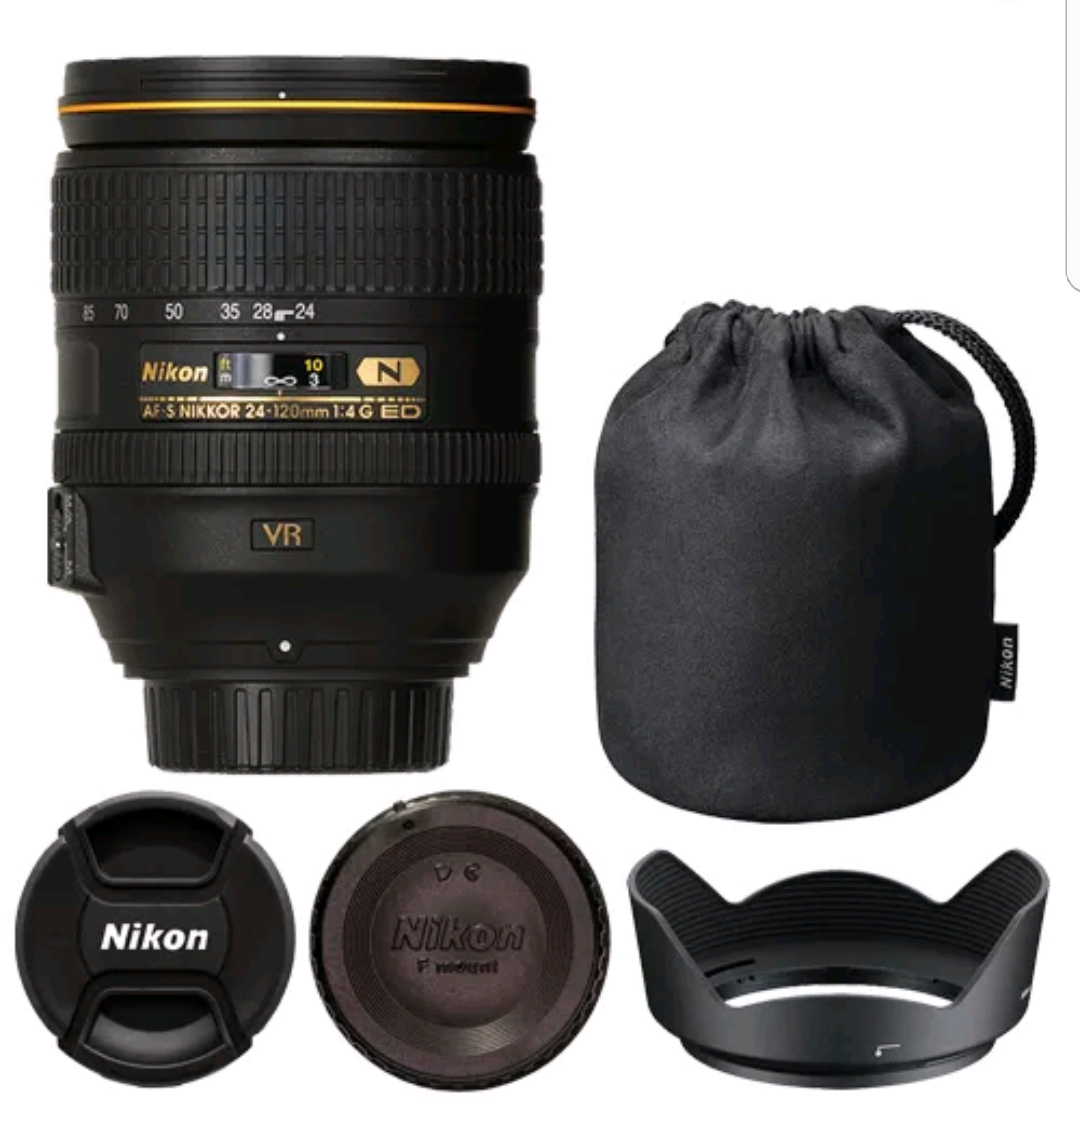 24 120mm 4g vr. Nikon 24-120mm f/4g. Объектив Nikon 24-120mm f/4g ed VR af-s Nikkor. Nikon 24-120mm f/4.